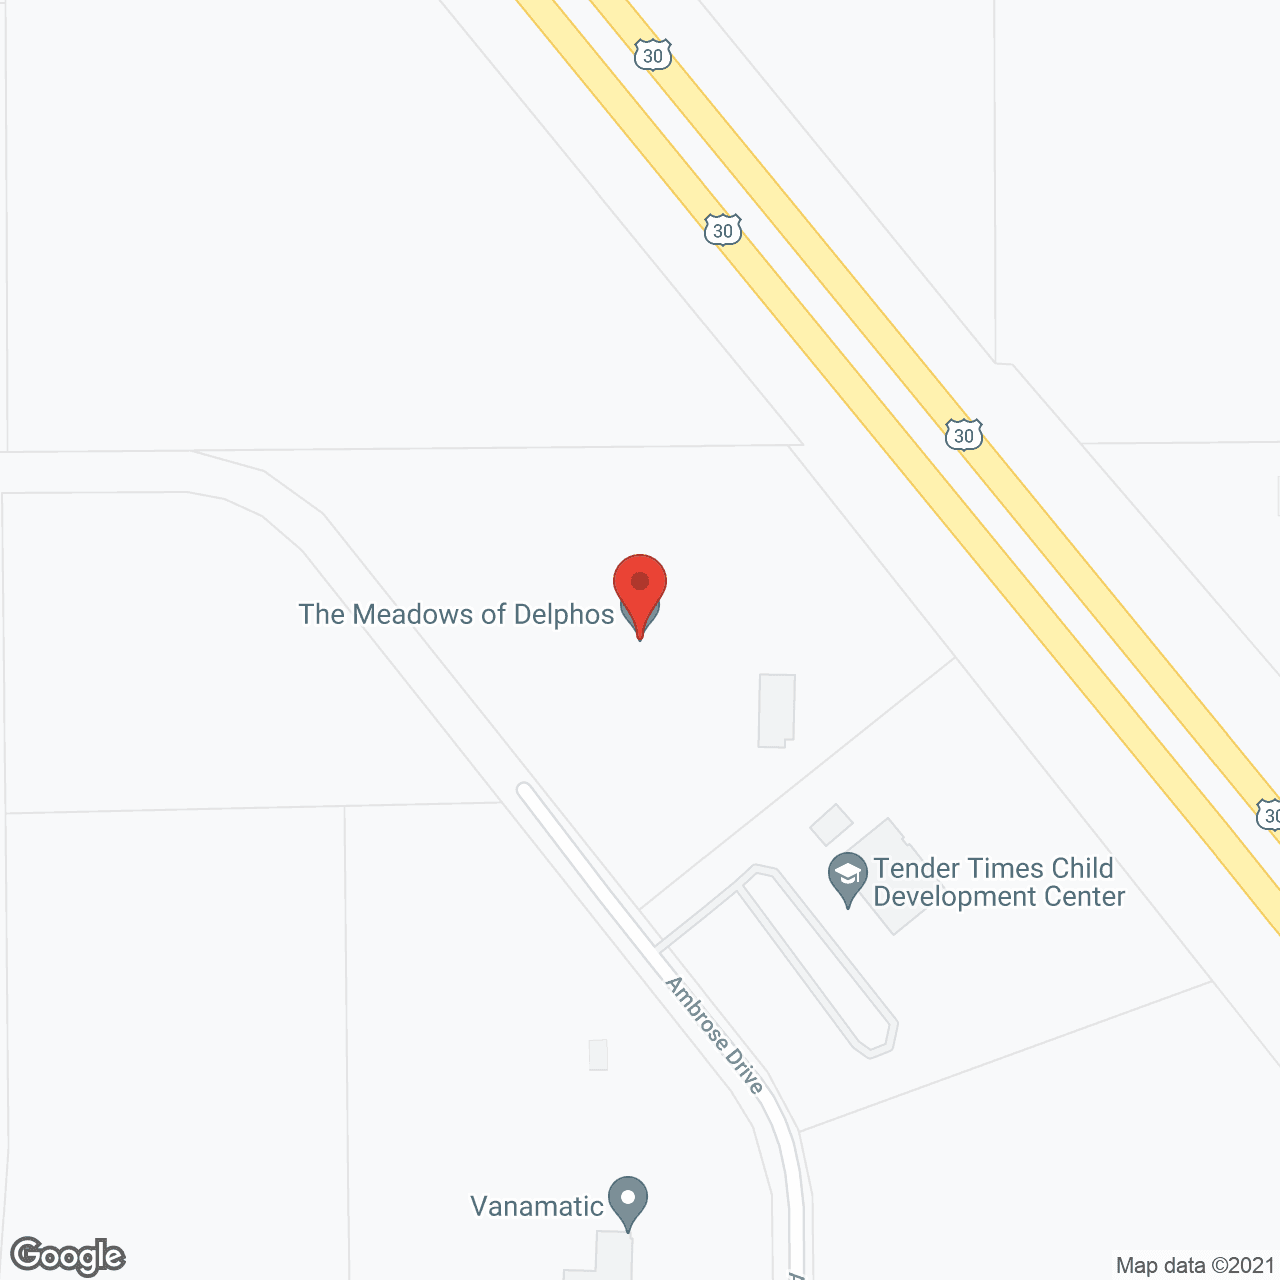 The Meadows of Delphos in google map